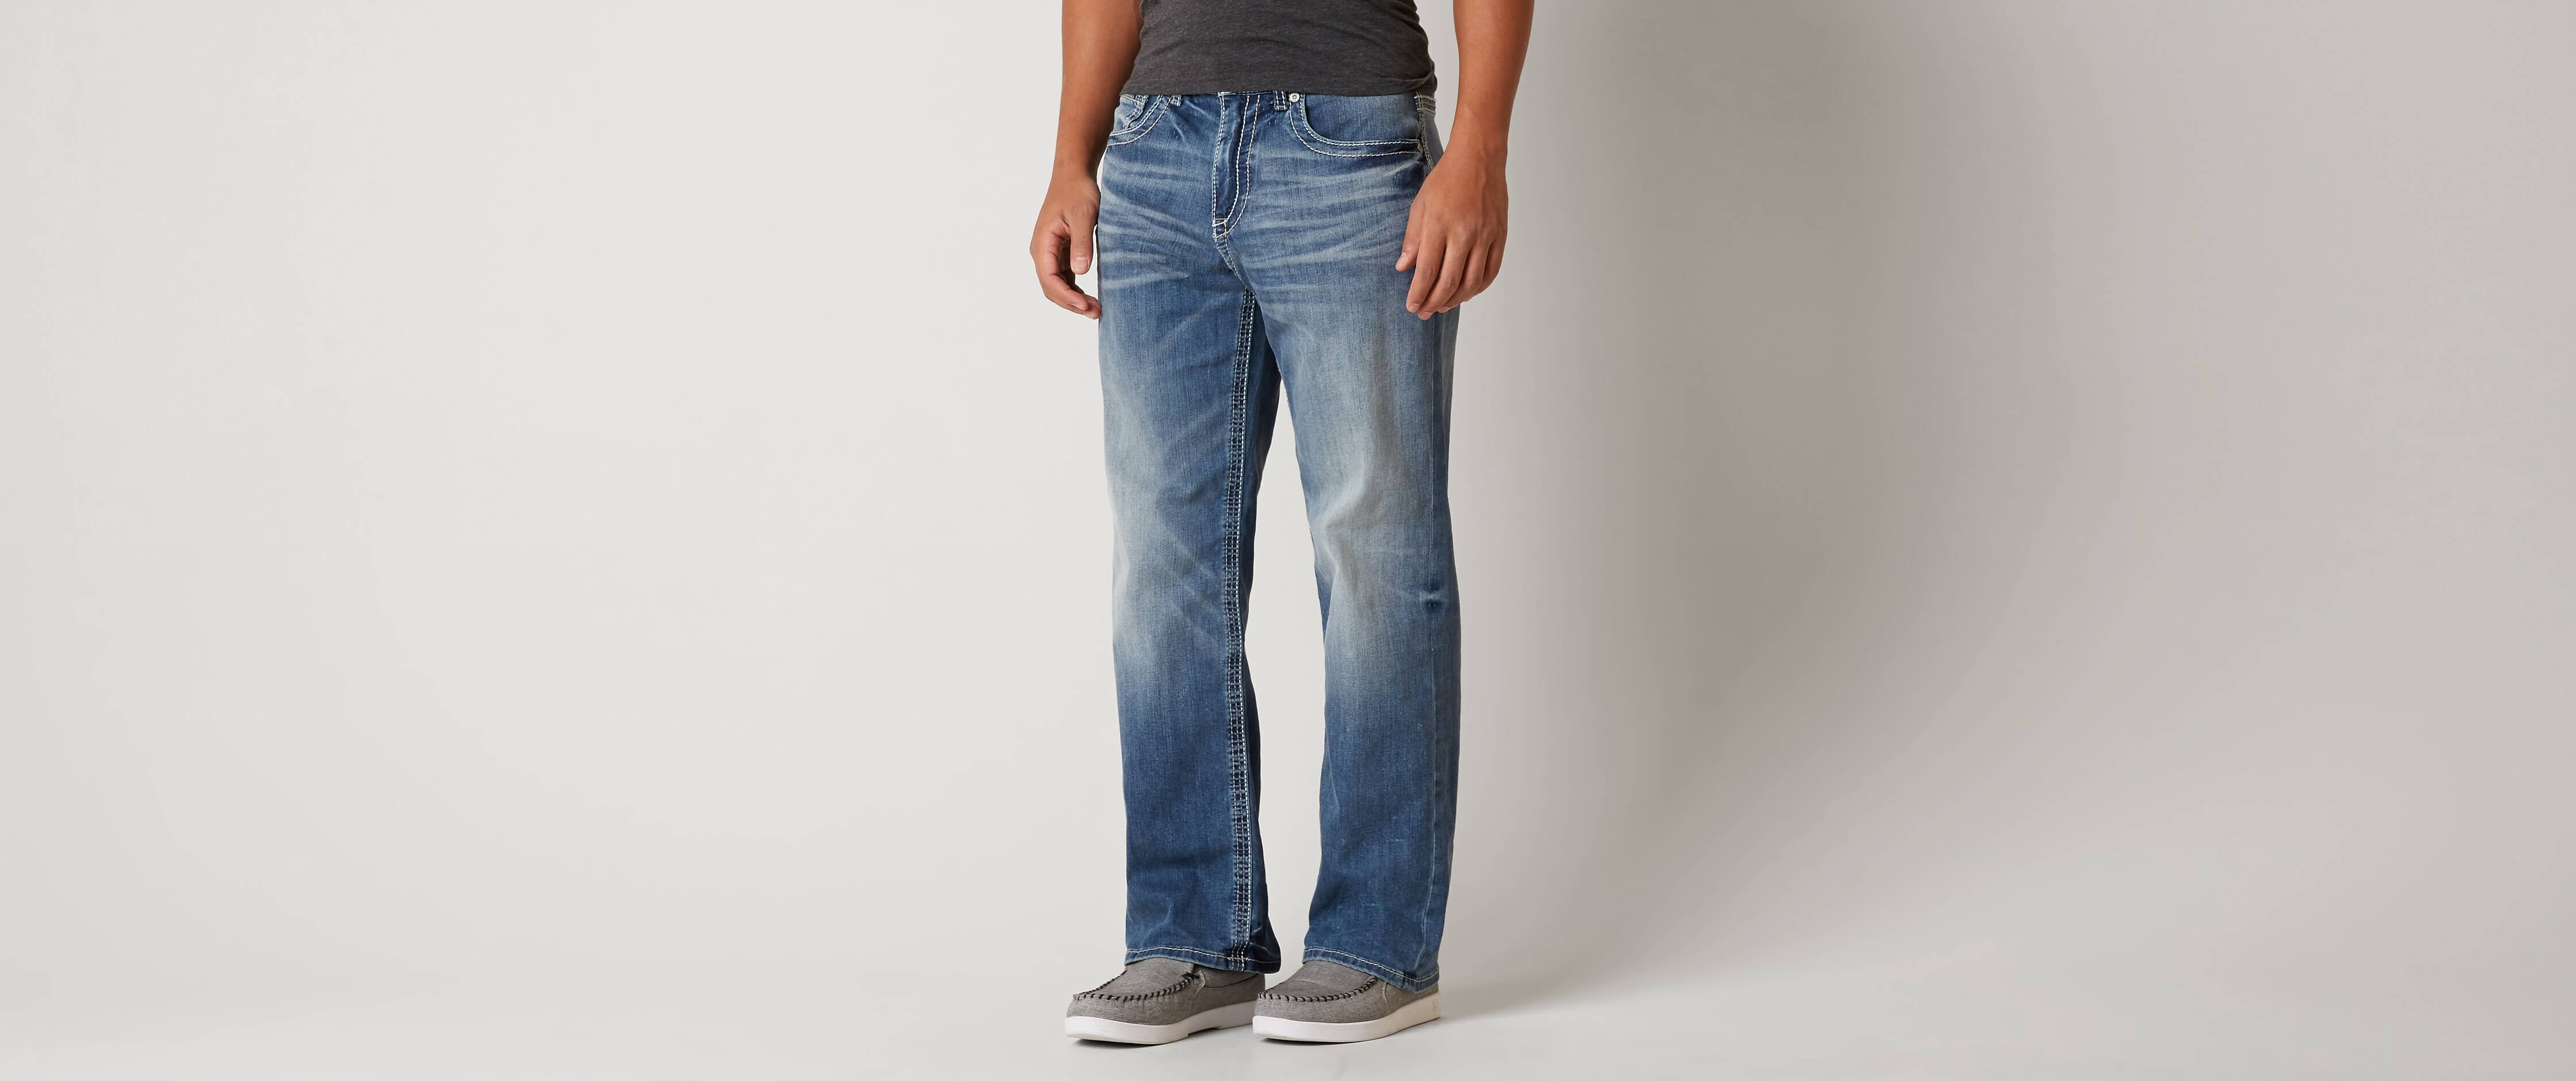 khaki combat jeans